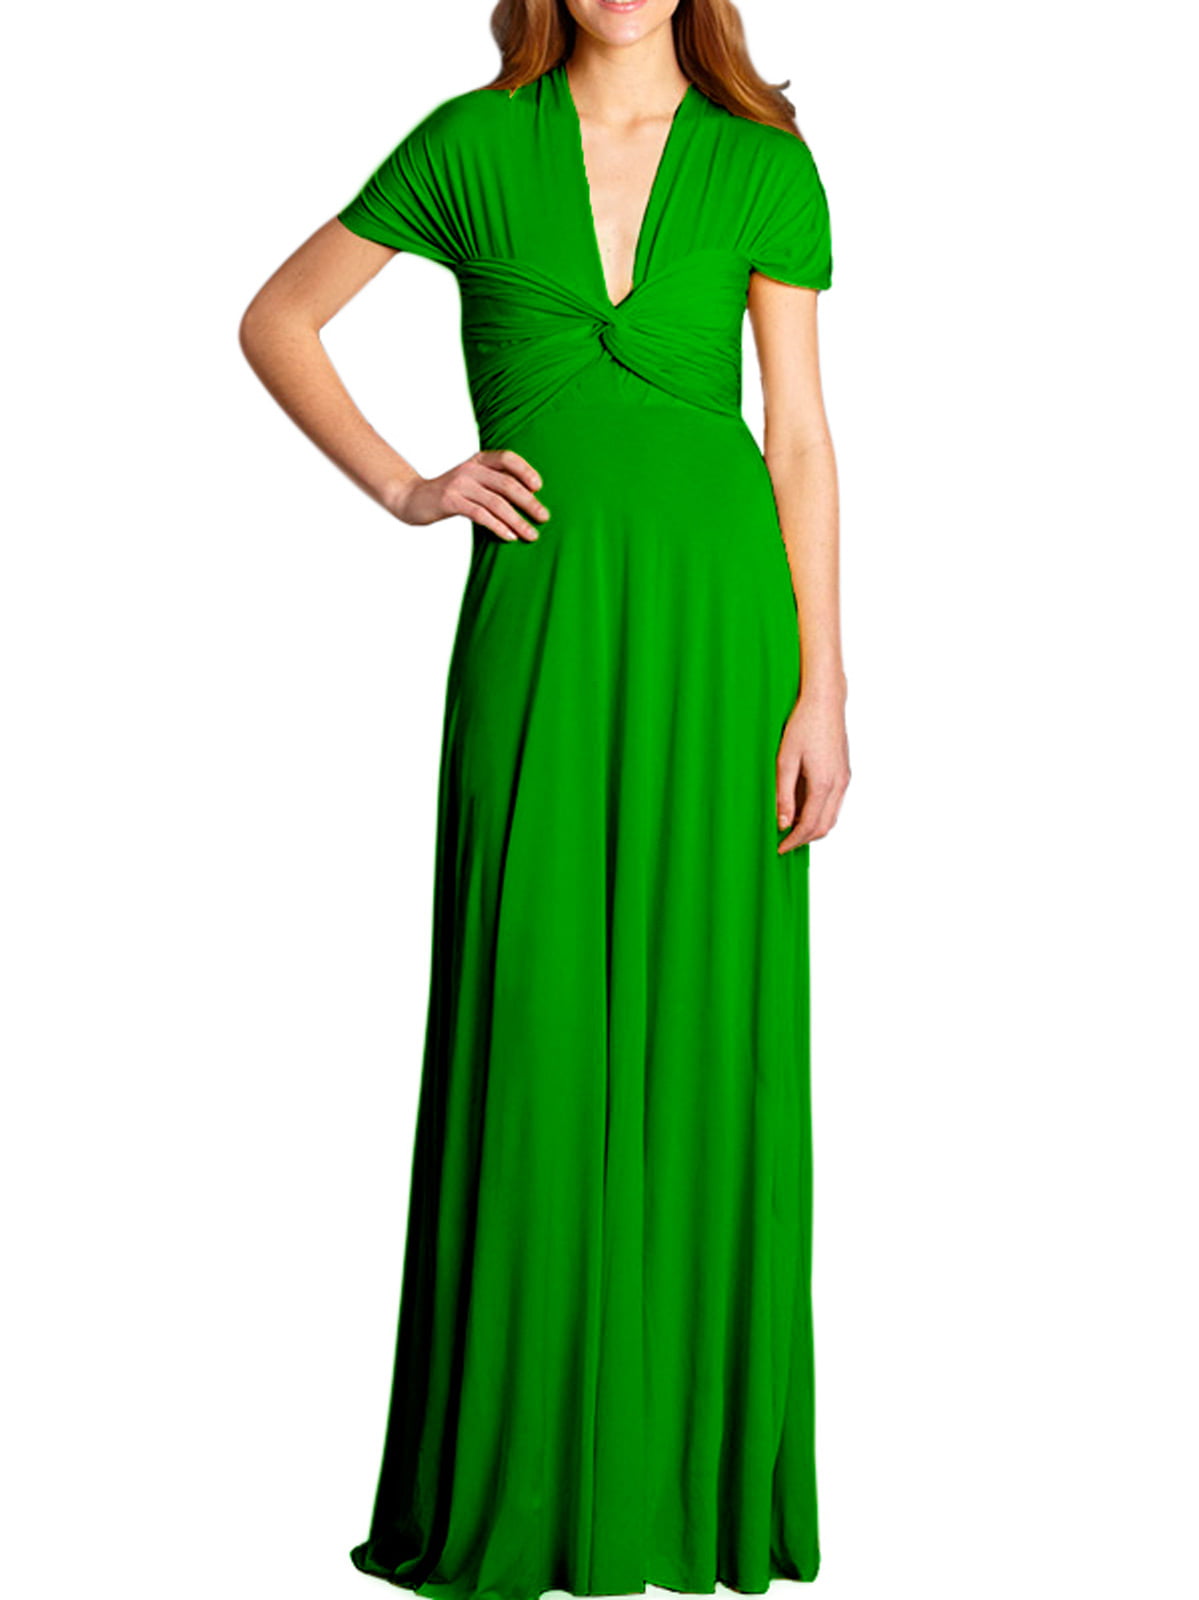 Details about   Emerald Jewel Dress